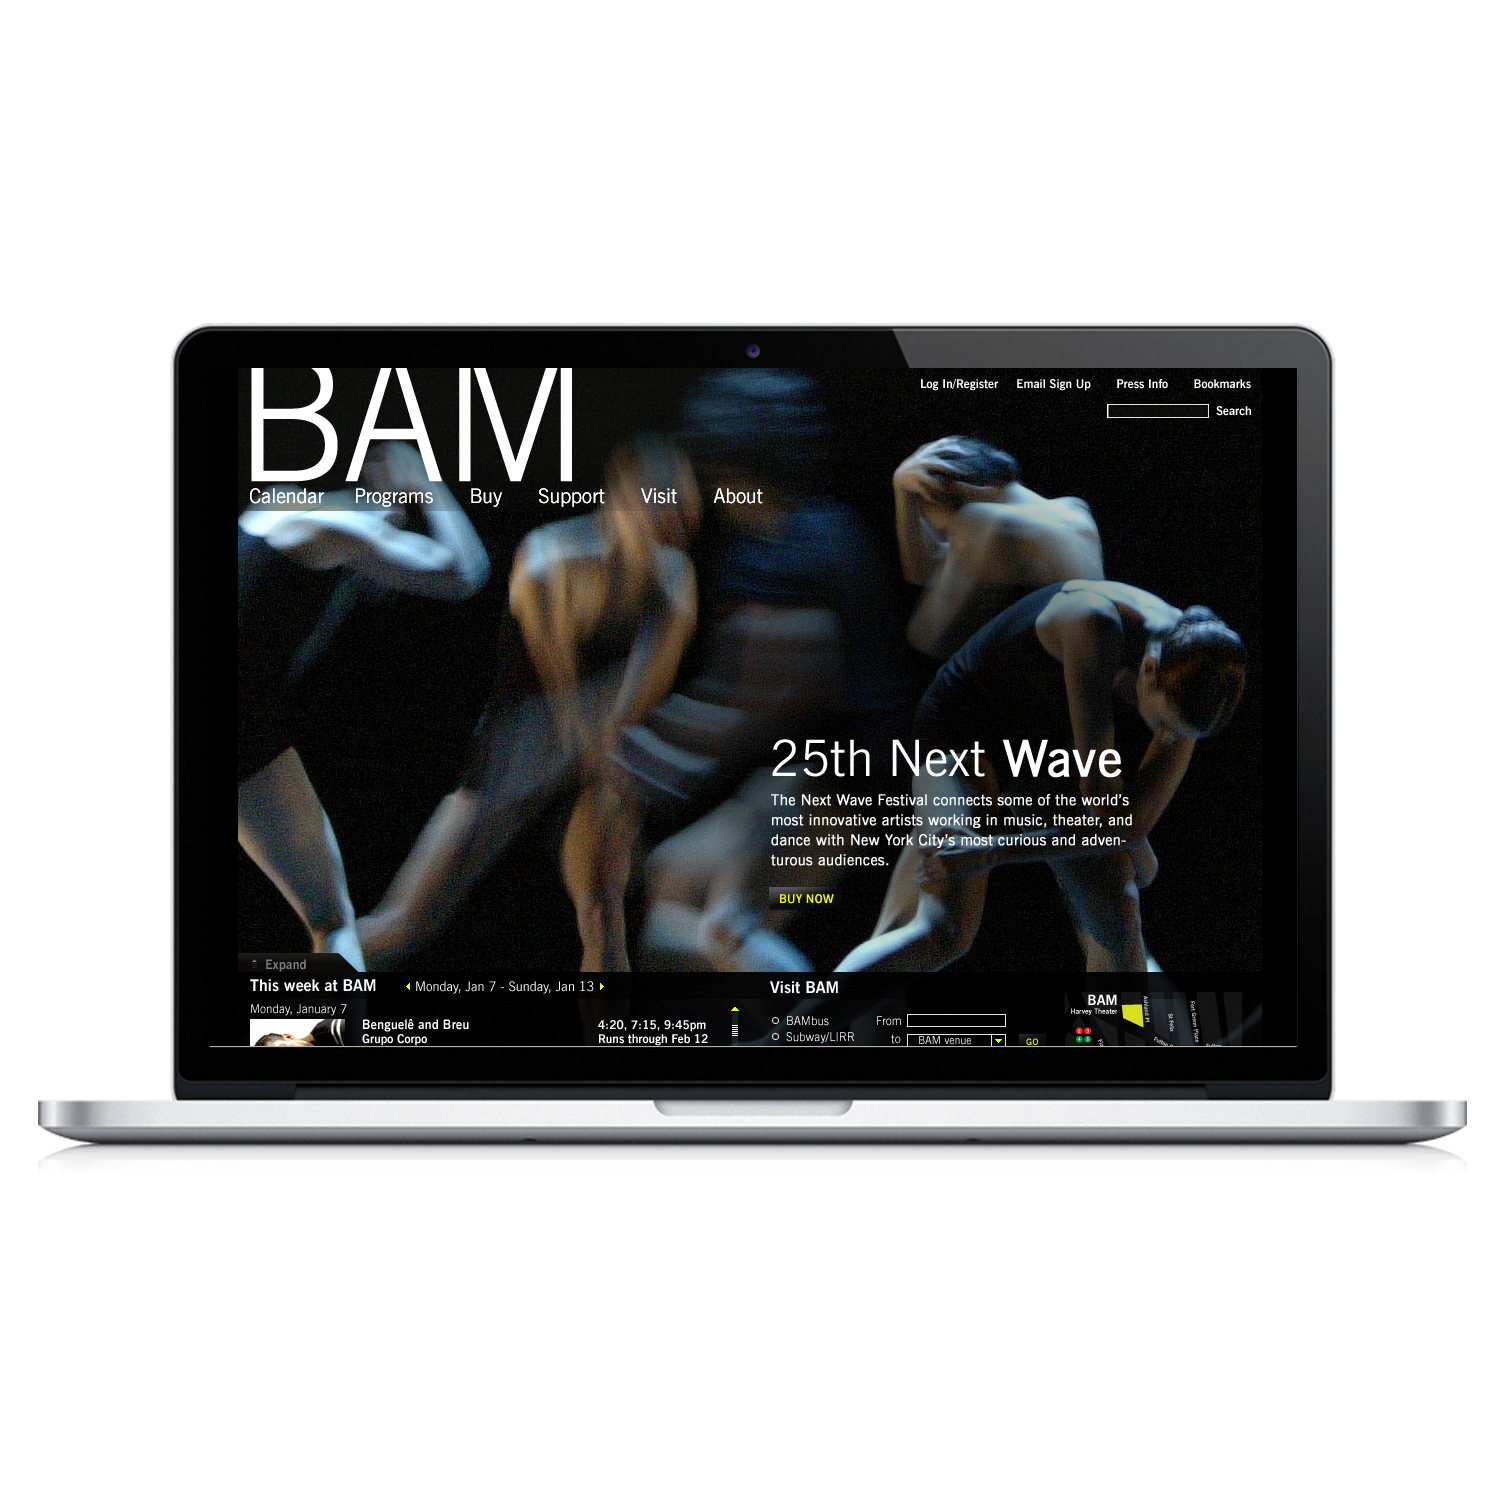 BAM (Brooklyn Academie of Music) webdesign